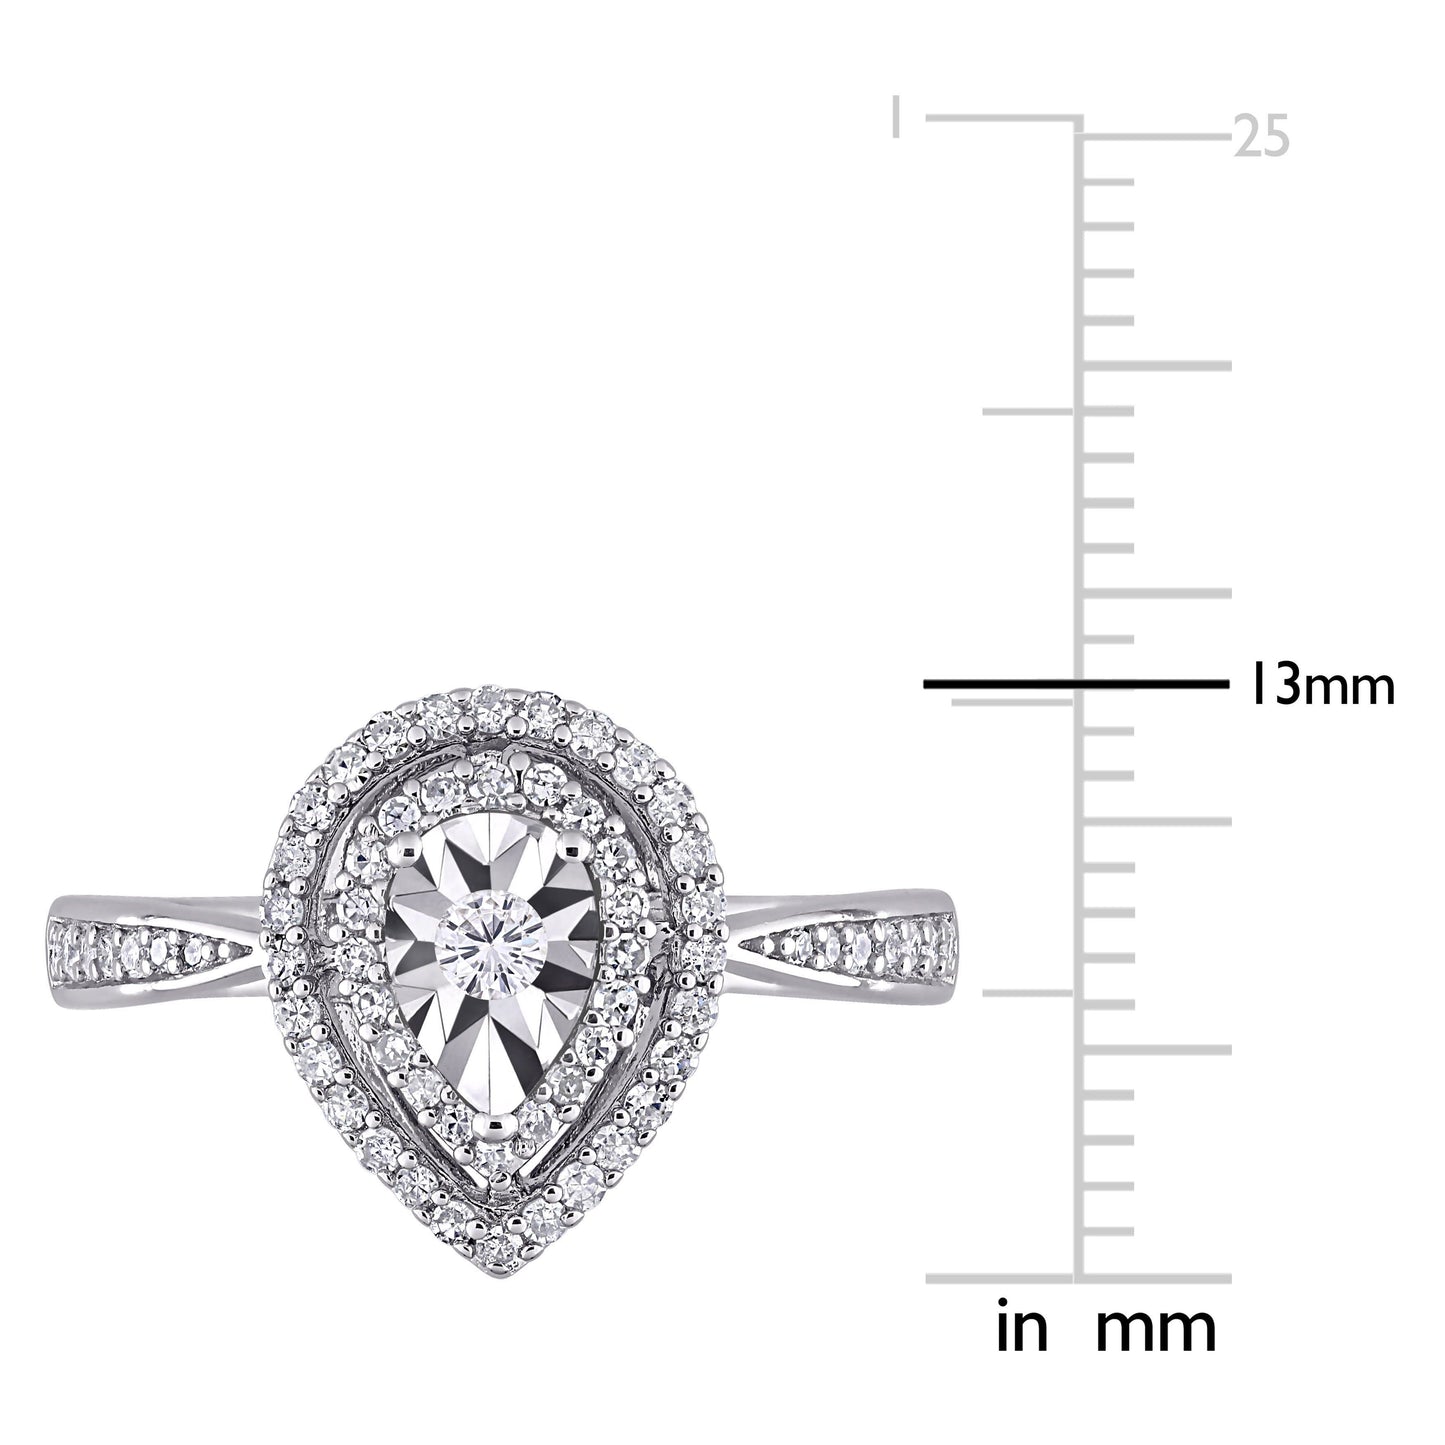 Julie Leah Pear Diamond Ring in Sterling Silver